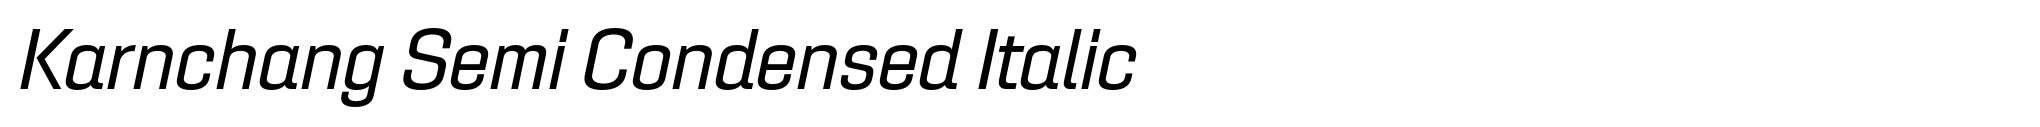 Karnchang Semi Condensed Italic image